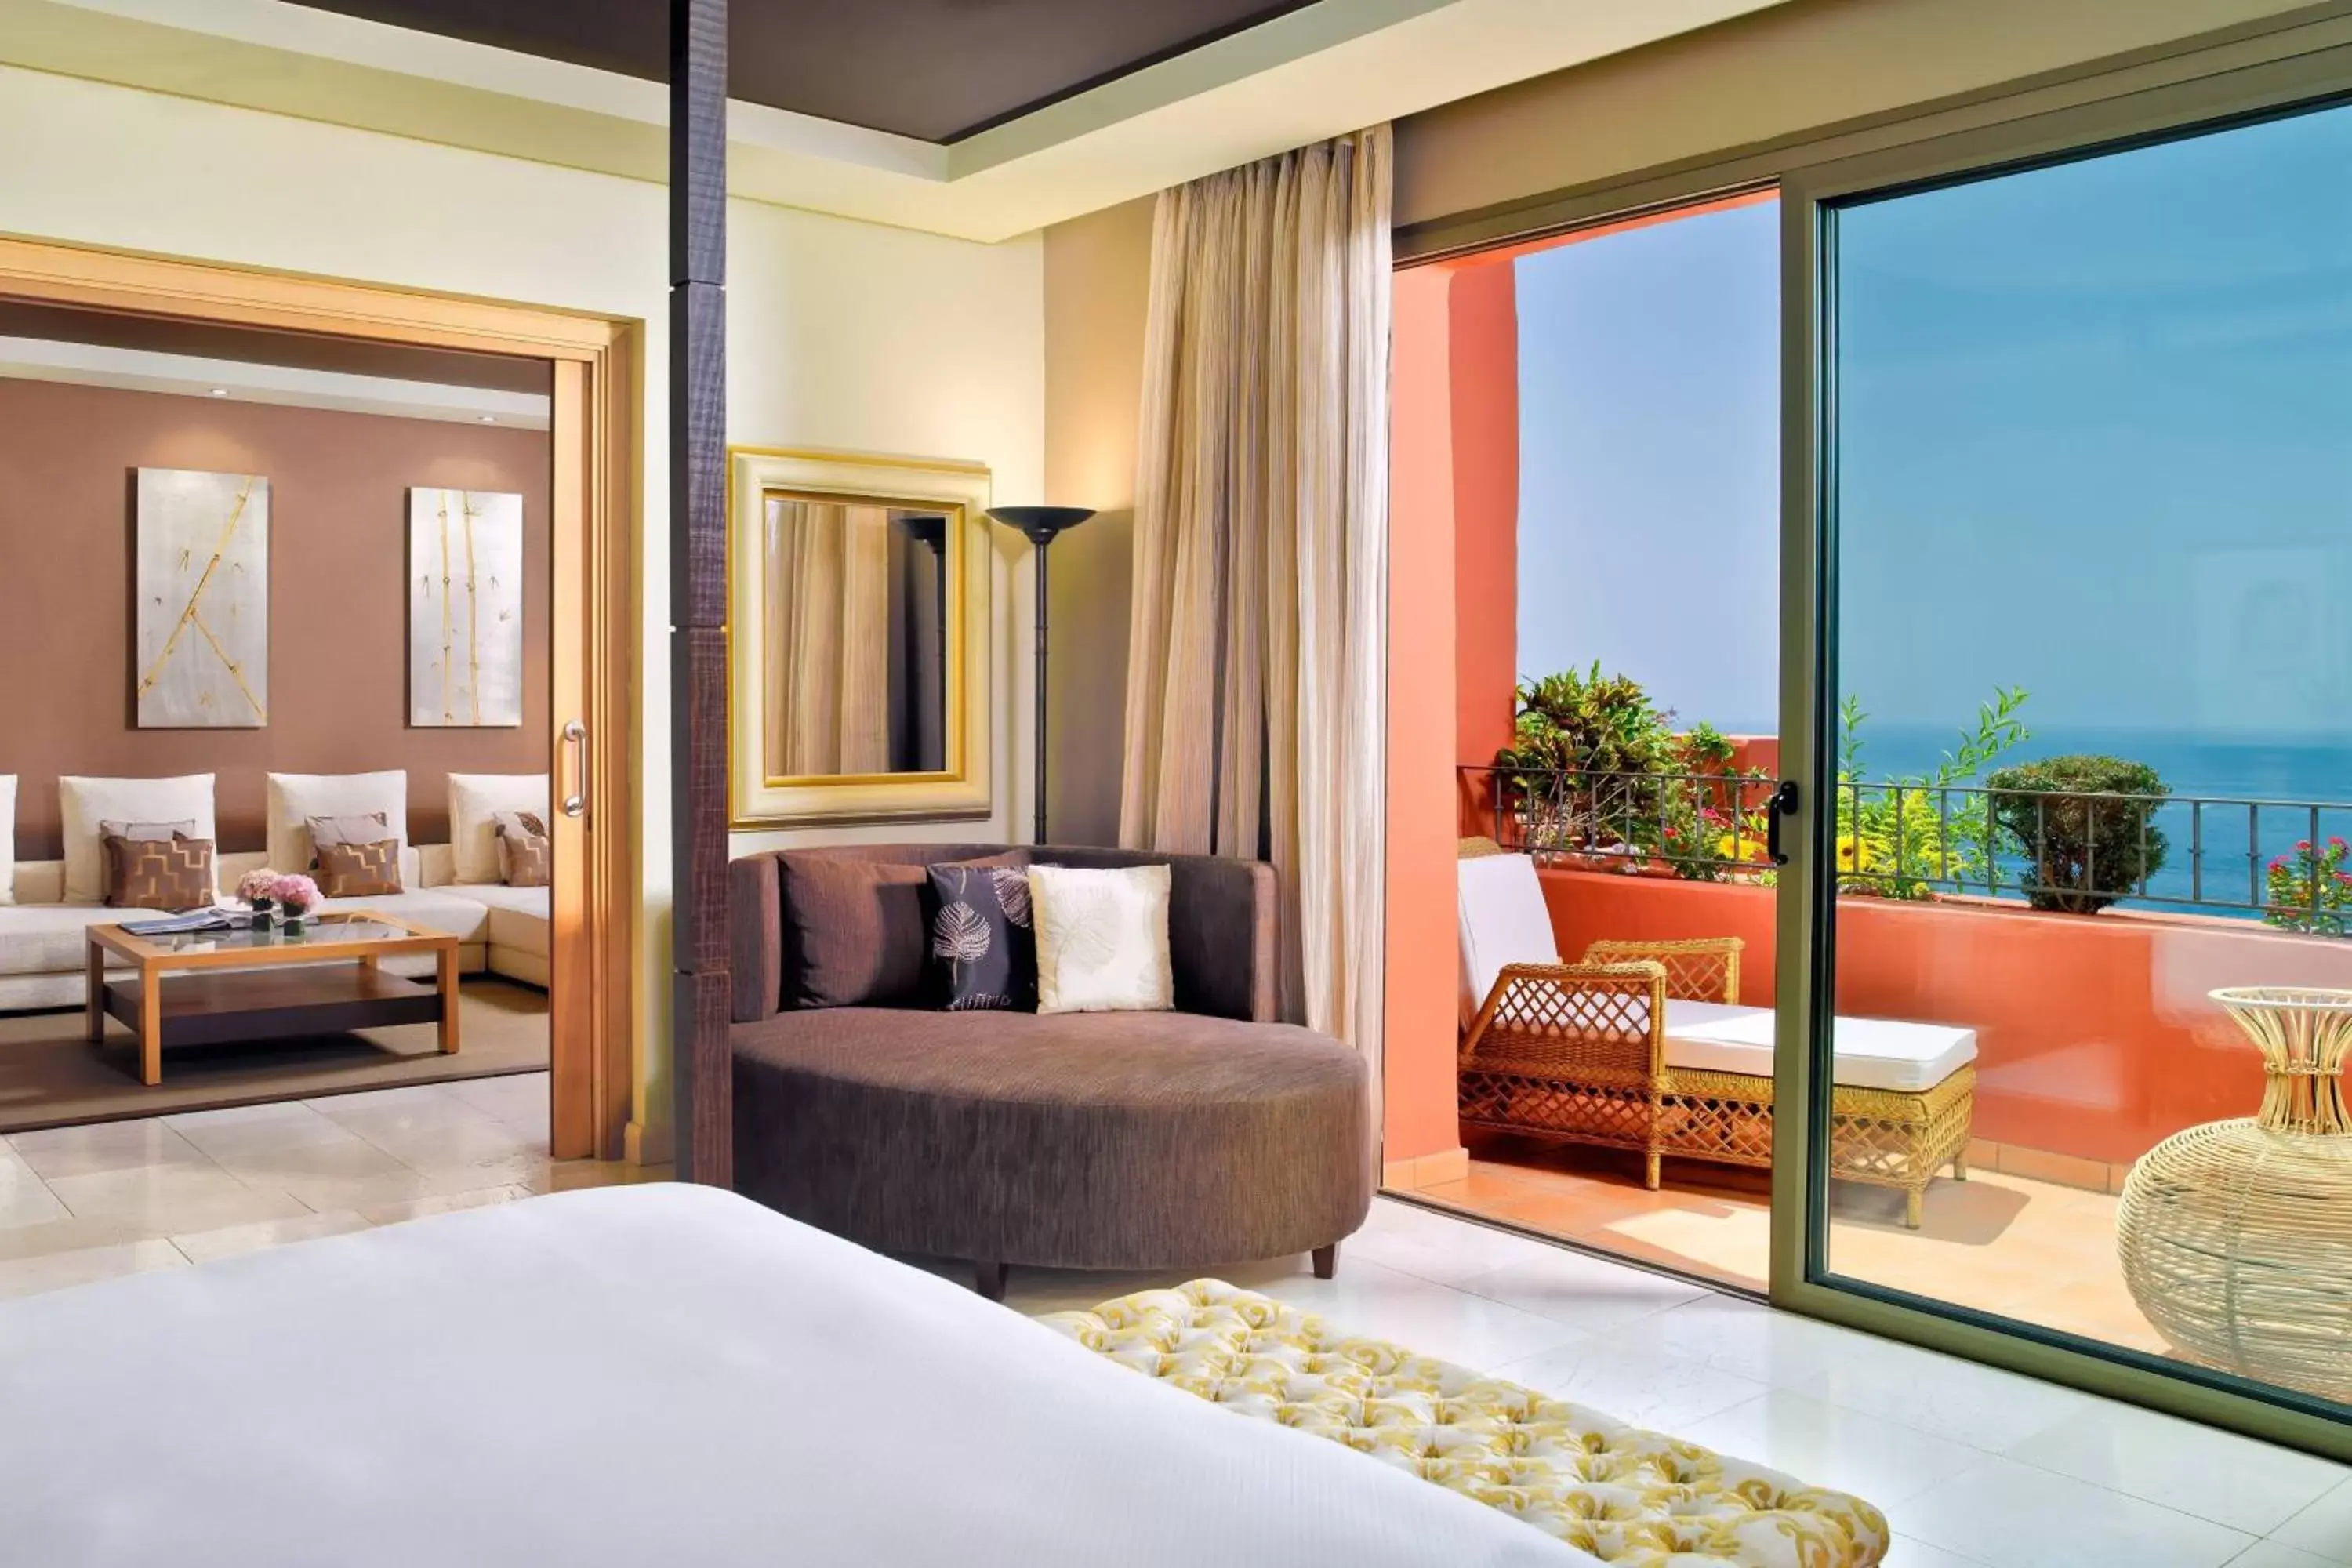 Bedroom, Seating Area in The Ritz-Carlton Tenerife, Abama